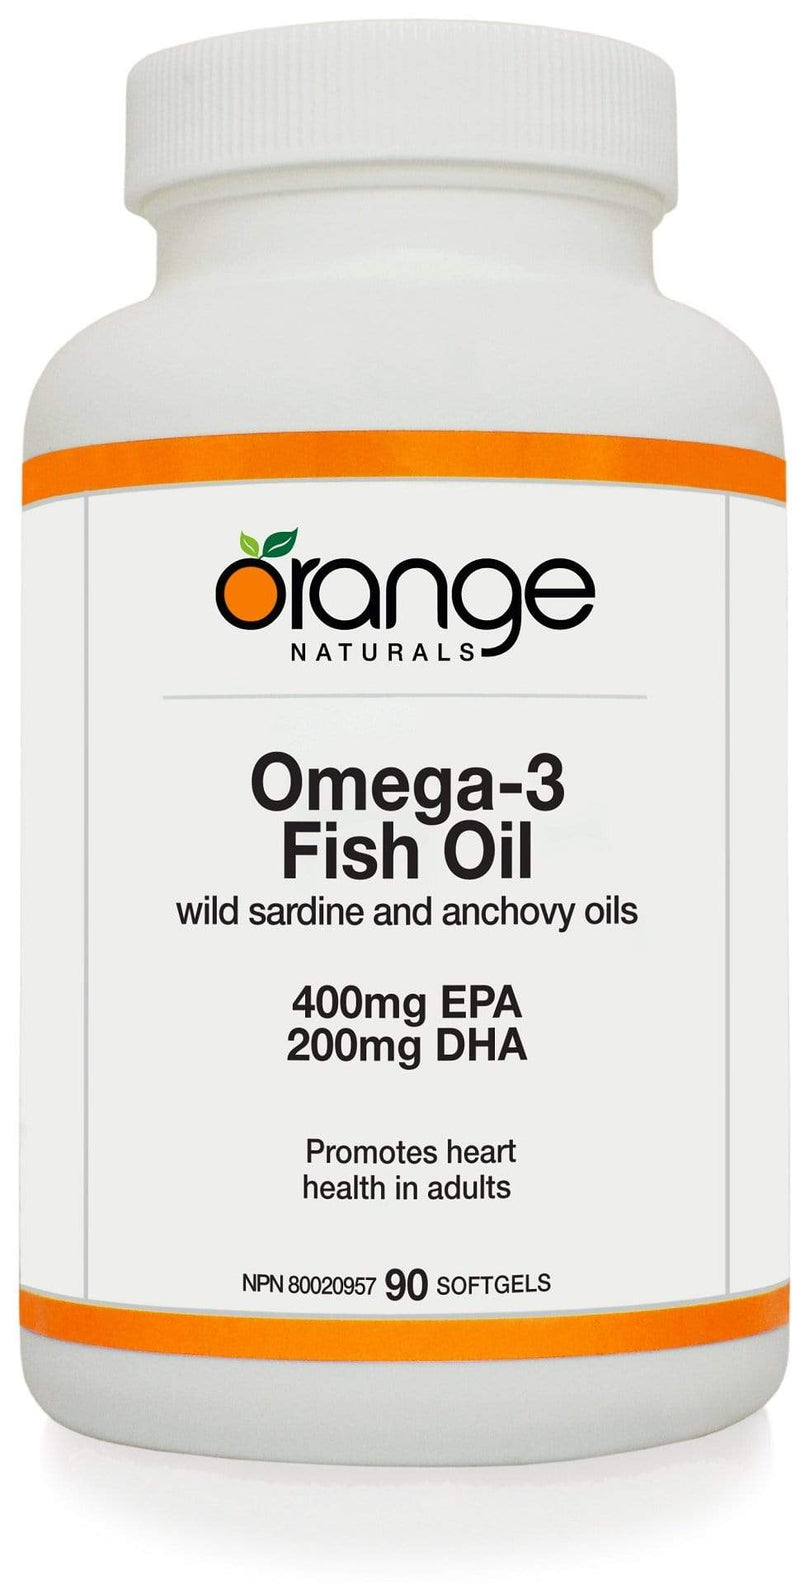 Orange Naturals Omega-3 Fish Oil 400 EPA / 200 DHA mg